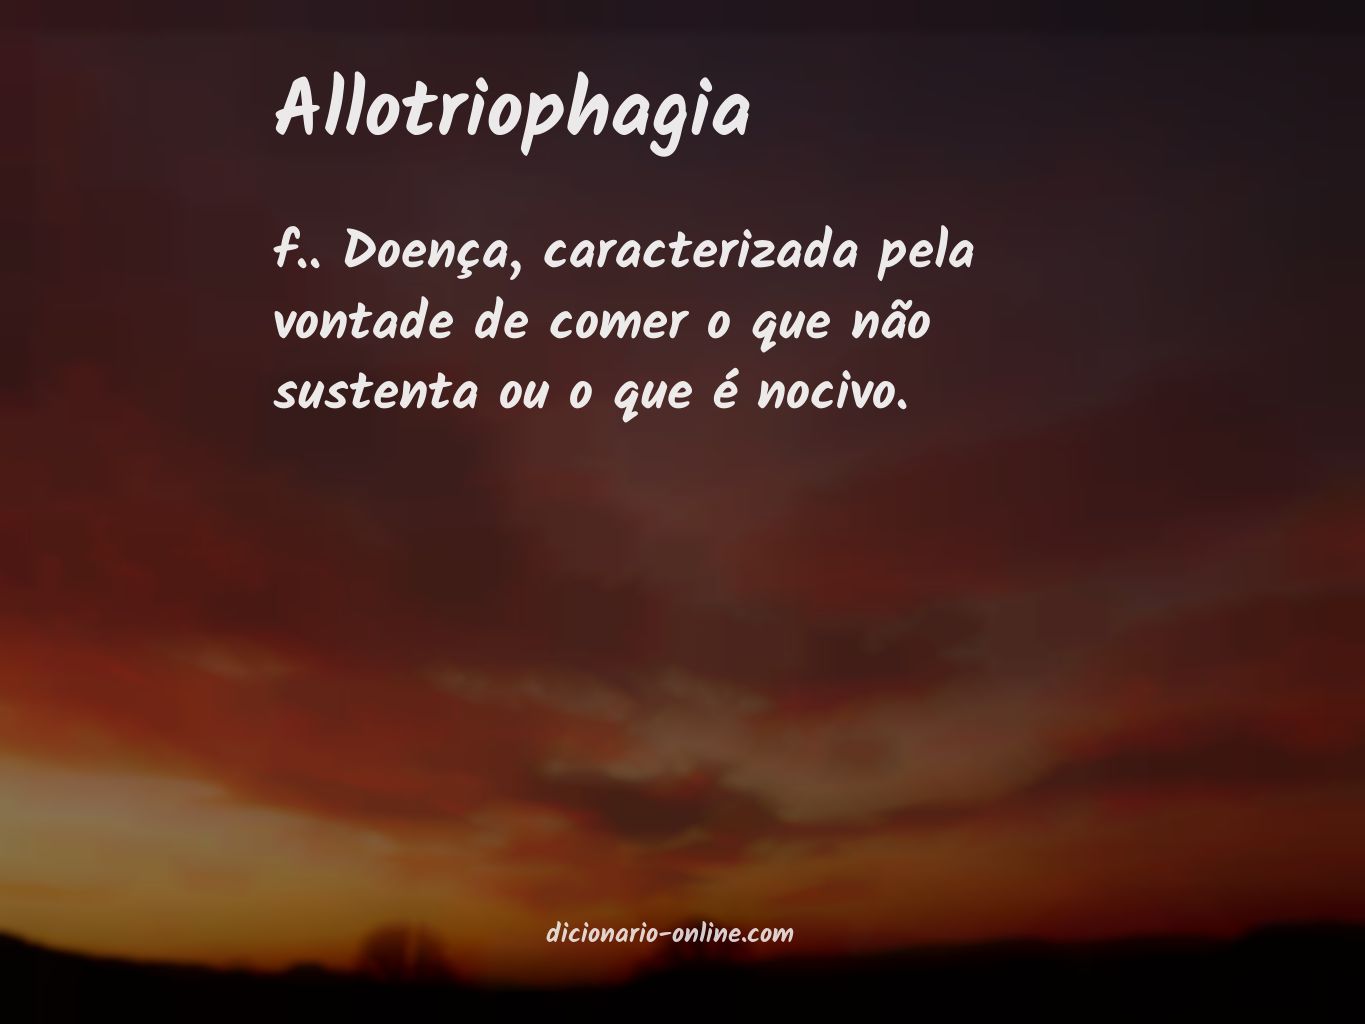 Significado de allotriophagia